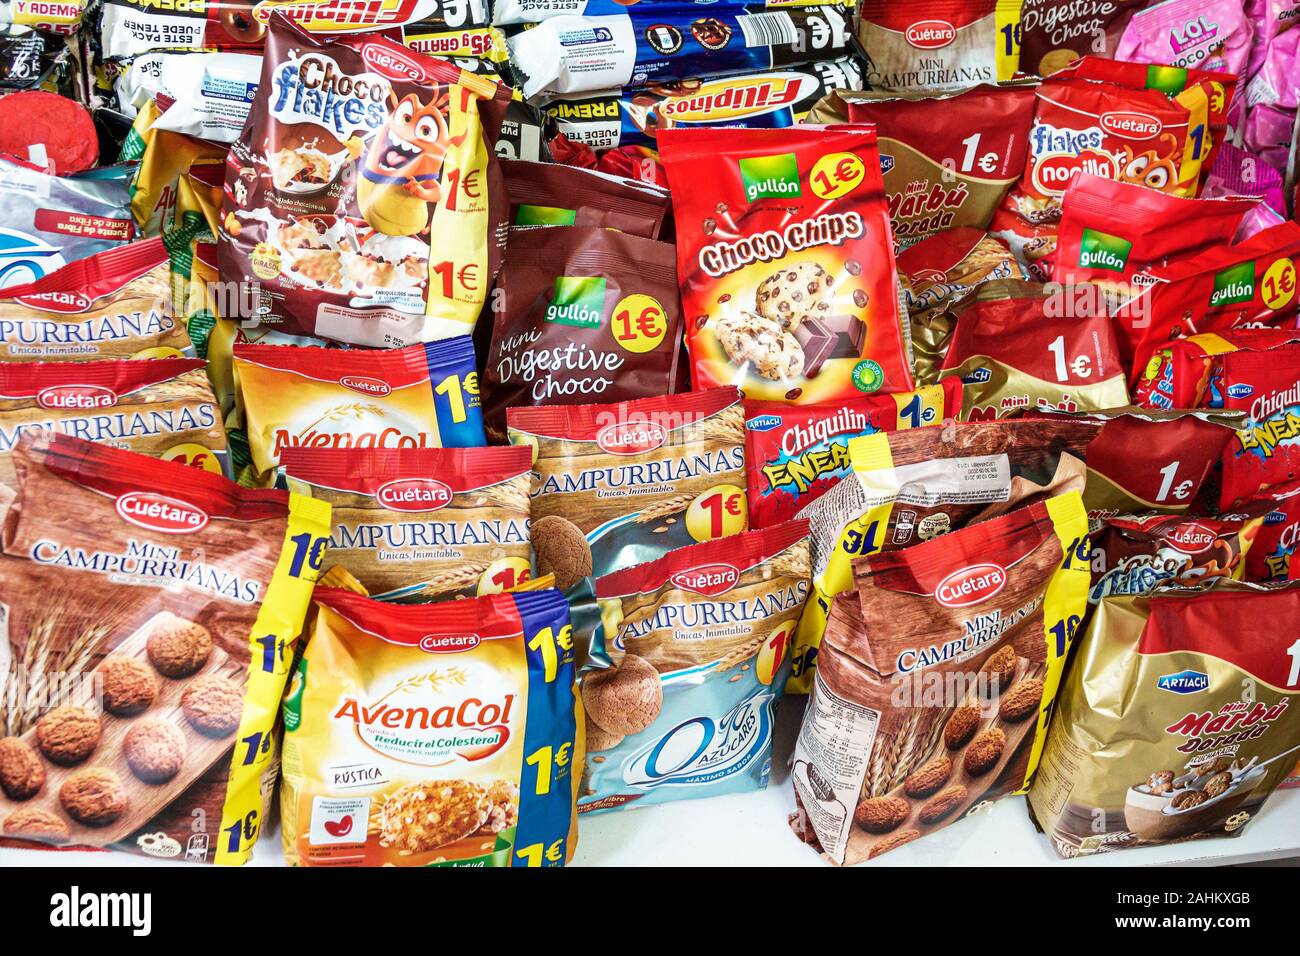 https://c8.alamy.com/comp/2AHKXGB/tarragona-spain-hispanic-catalonia-snack-foodbreakfast-cereal-cookiescuetaragullonbrandsmarketdisplay-saleconvenience-store1-euro-pricees1908-2AHKXGB.jpg